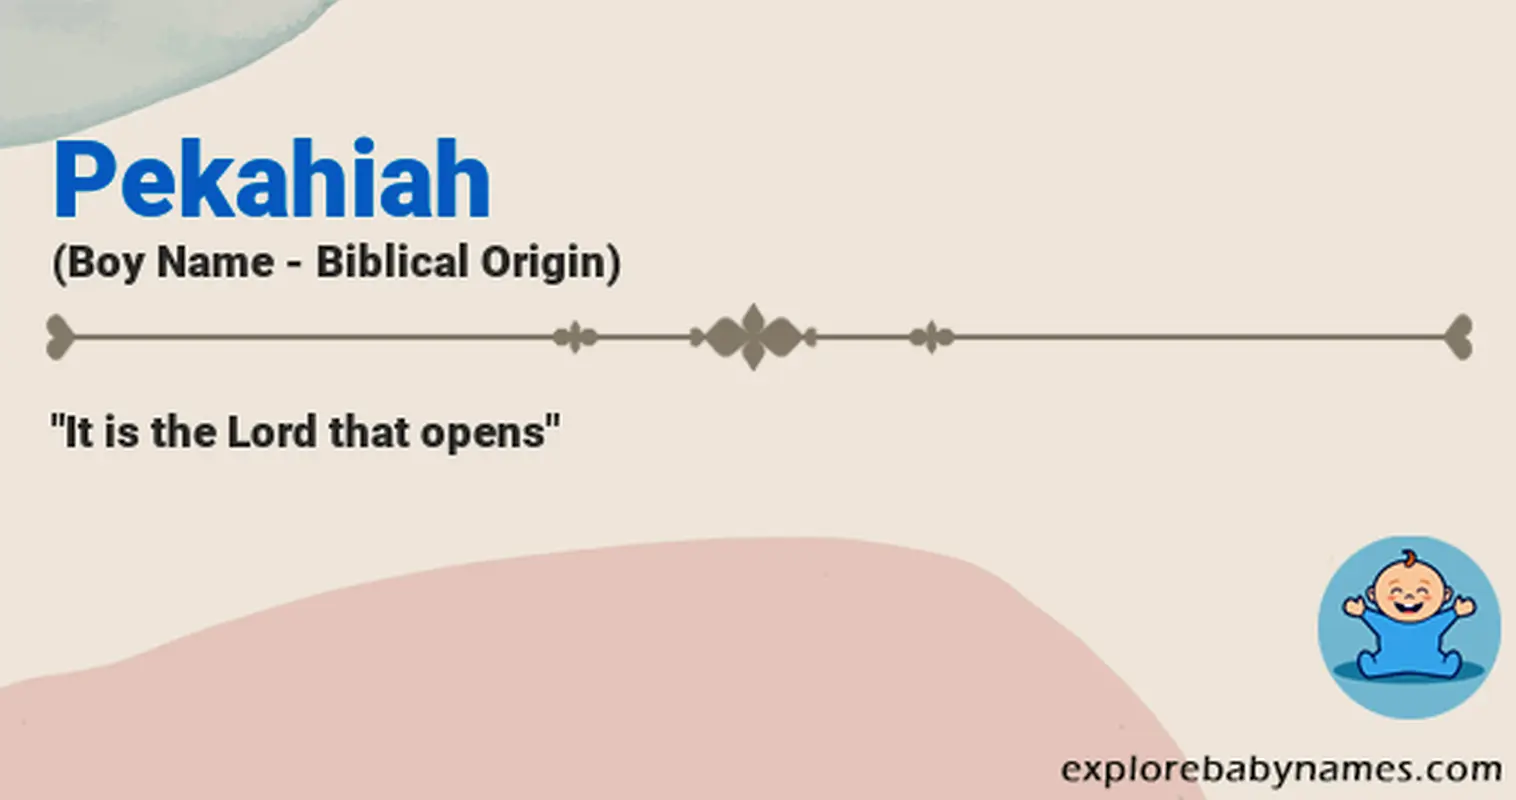 Meaning of Pekahiah